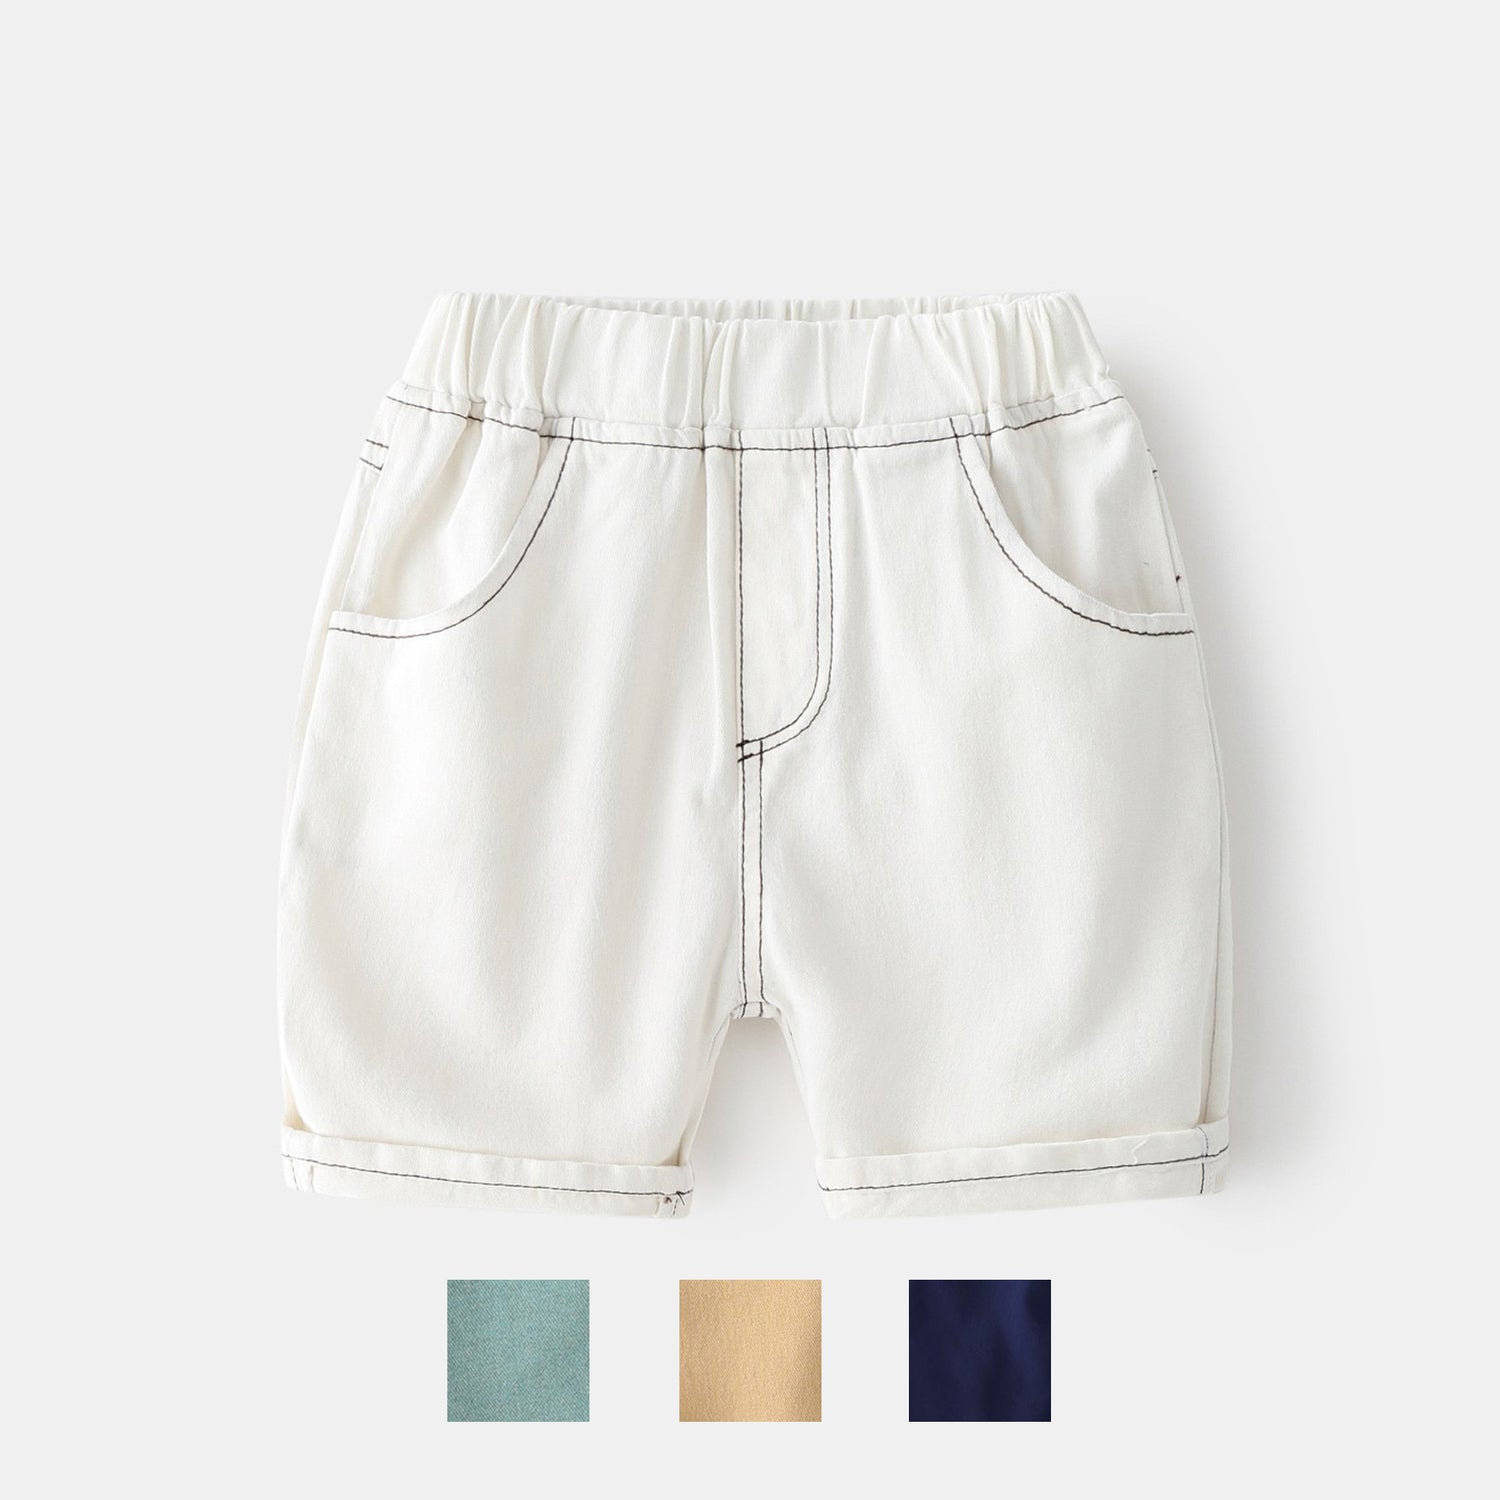 [513300] - Bawahan Pendek / Celana Style Santai Anak Import - Motif Stitch Line